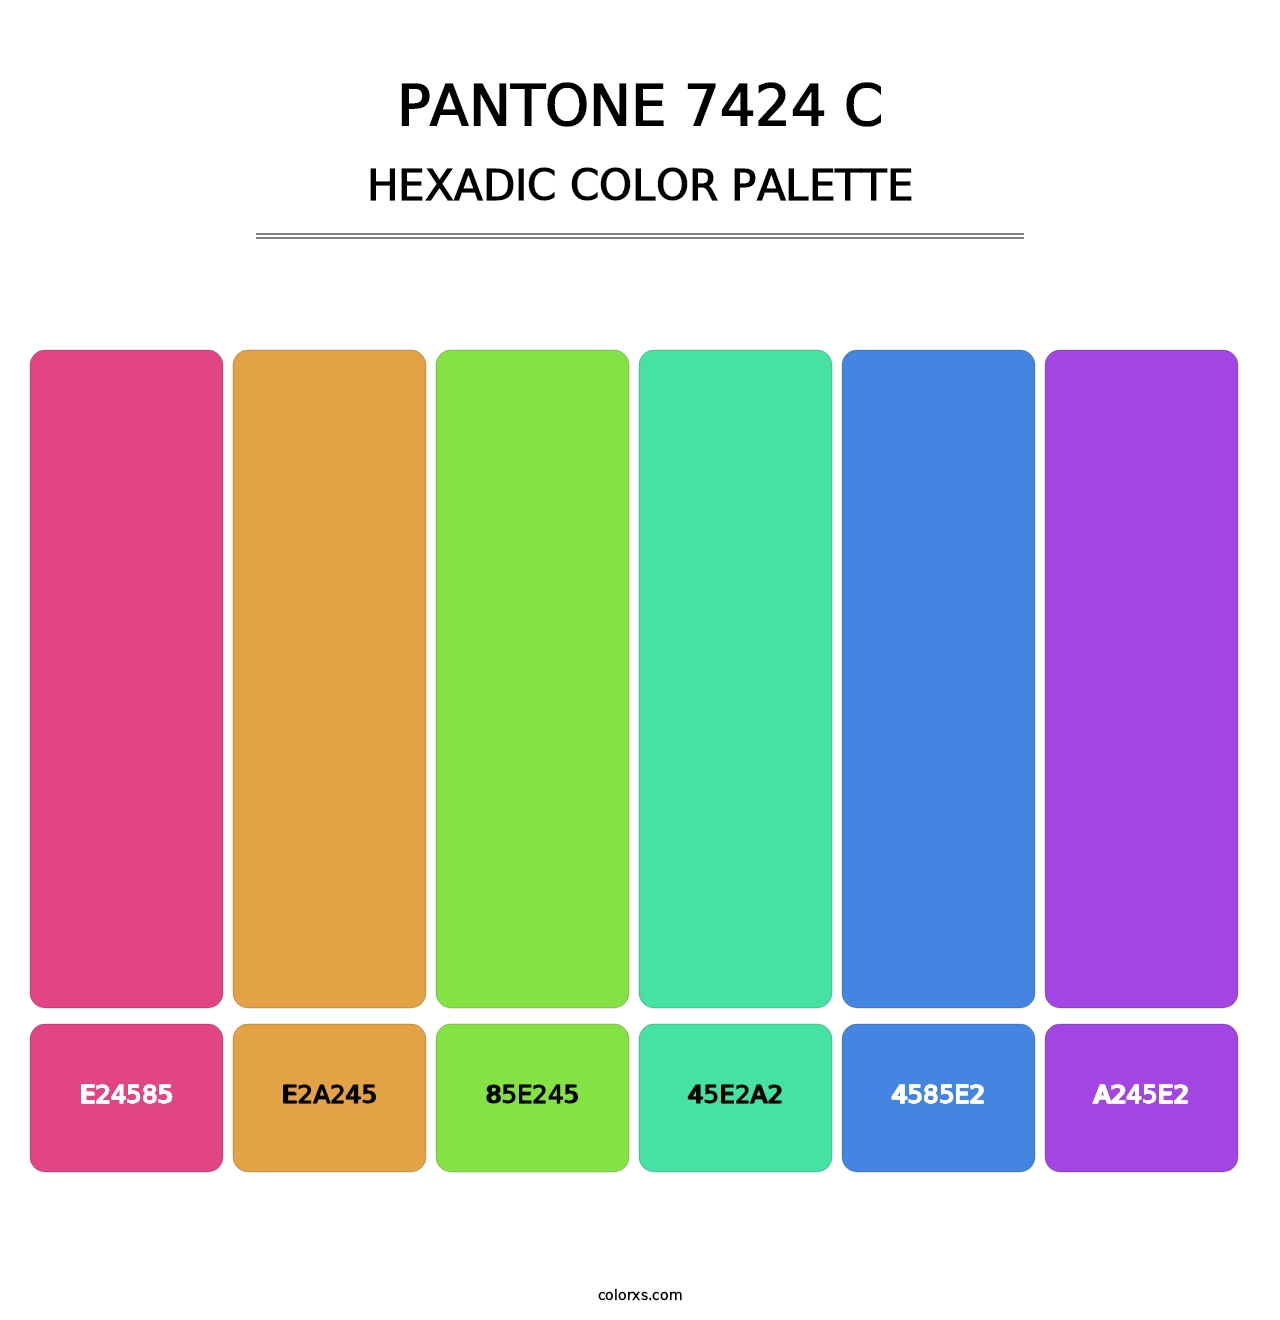 PANTONE 7424 C - Hexadic Color Palette